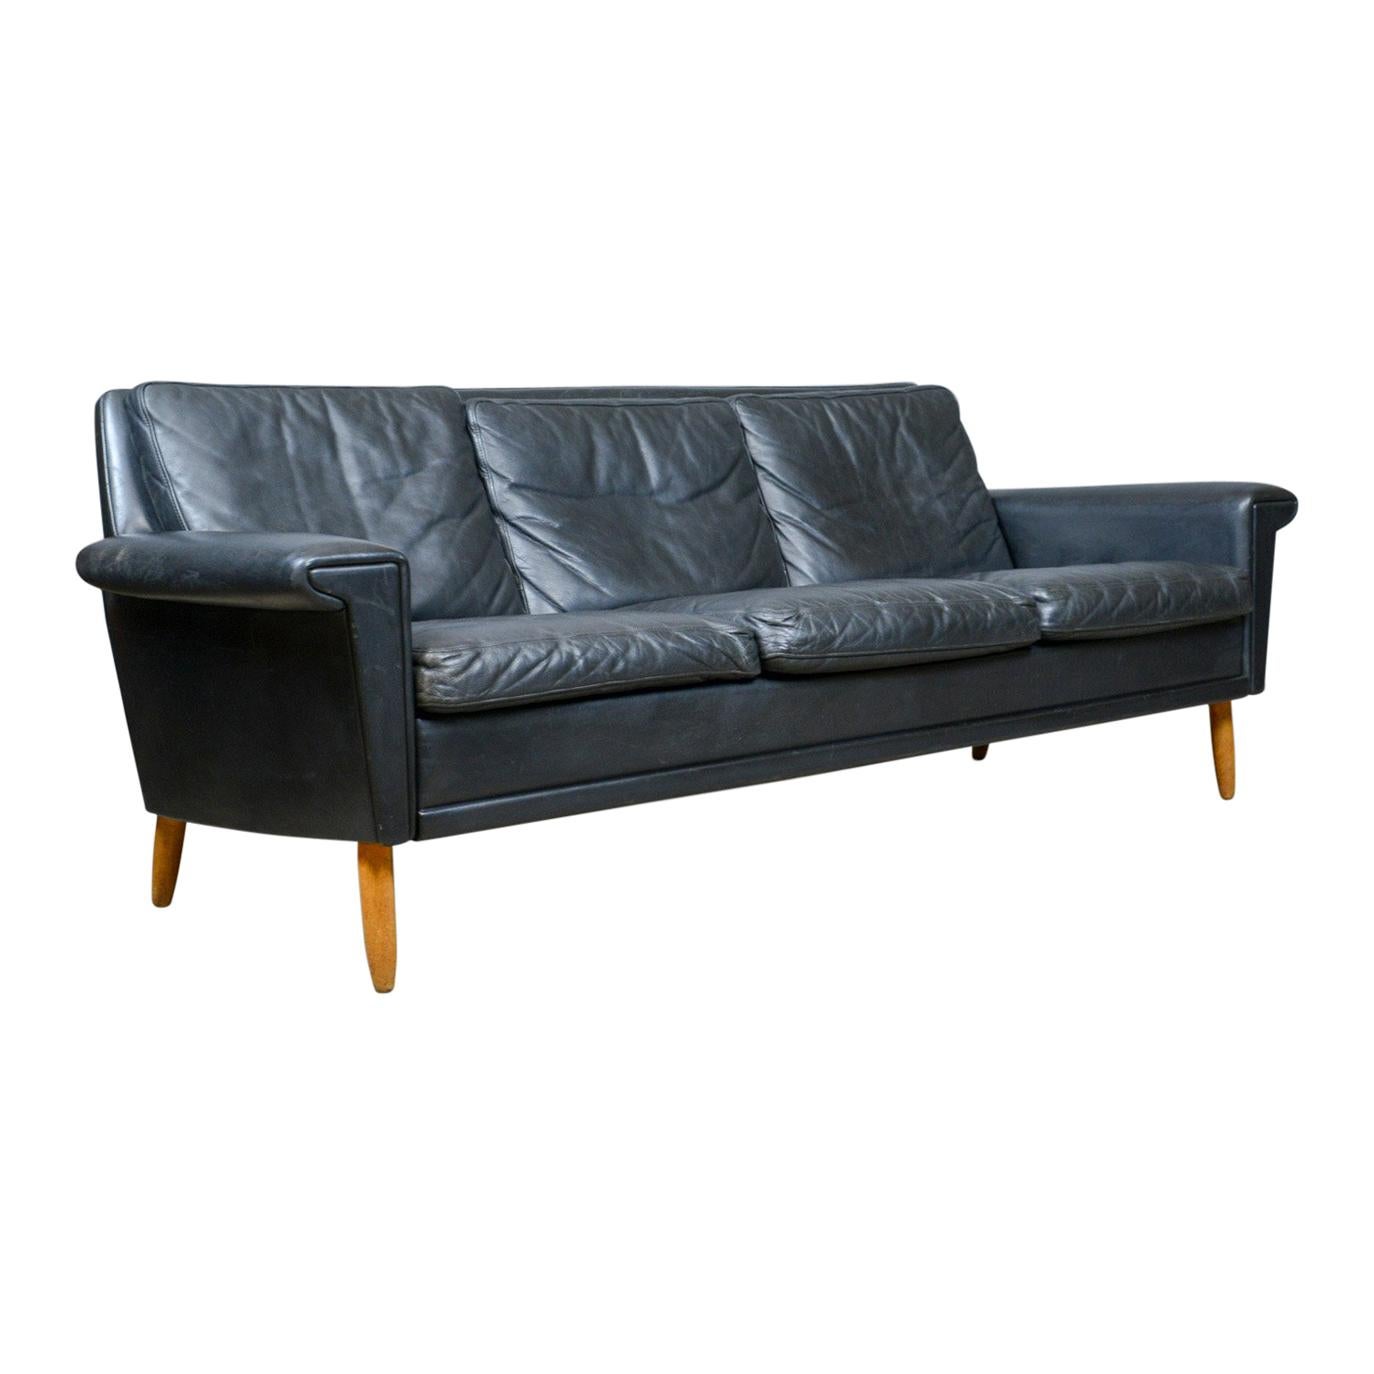 Vintage Mid-Century Modern Black Leather Sofa, Danish, Three-Seat, circa 1970